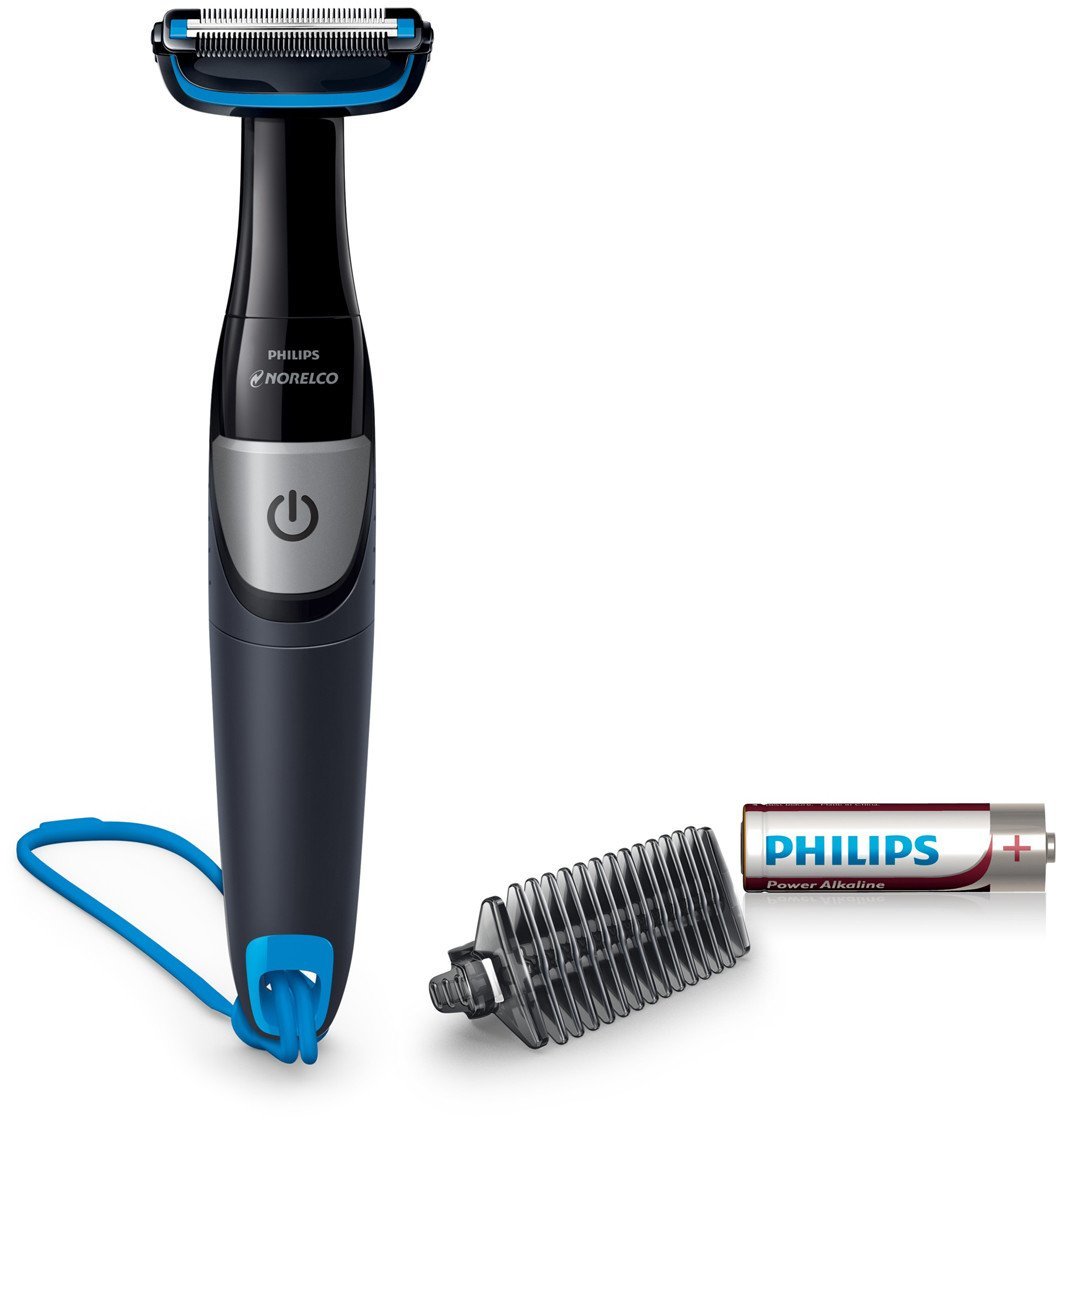 Primary image for Showerproof Body Hair Trimmer And Groomer For Men, Bg1026/60, From Philips